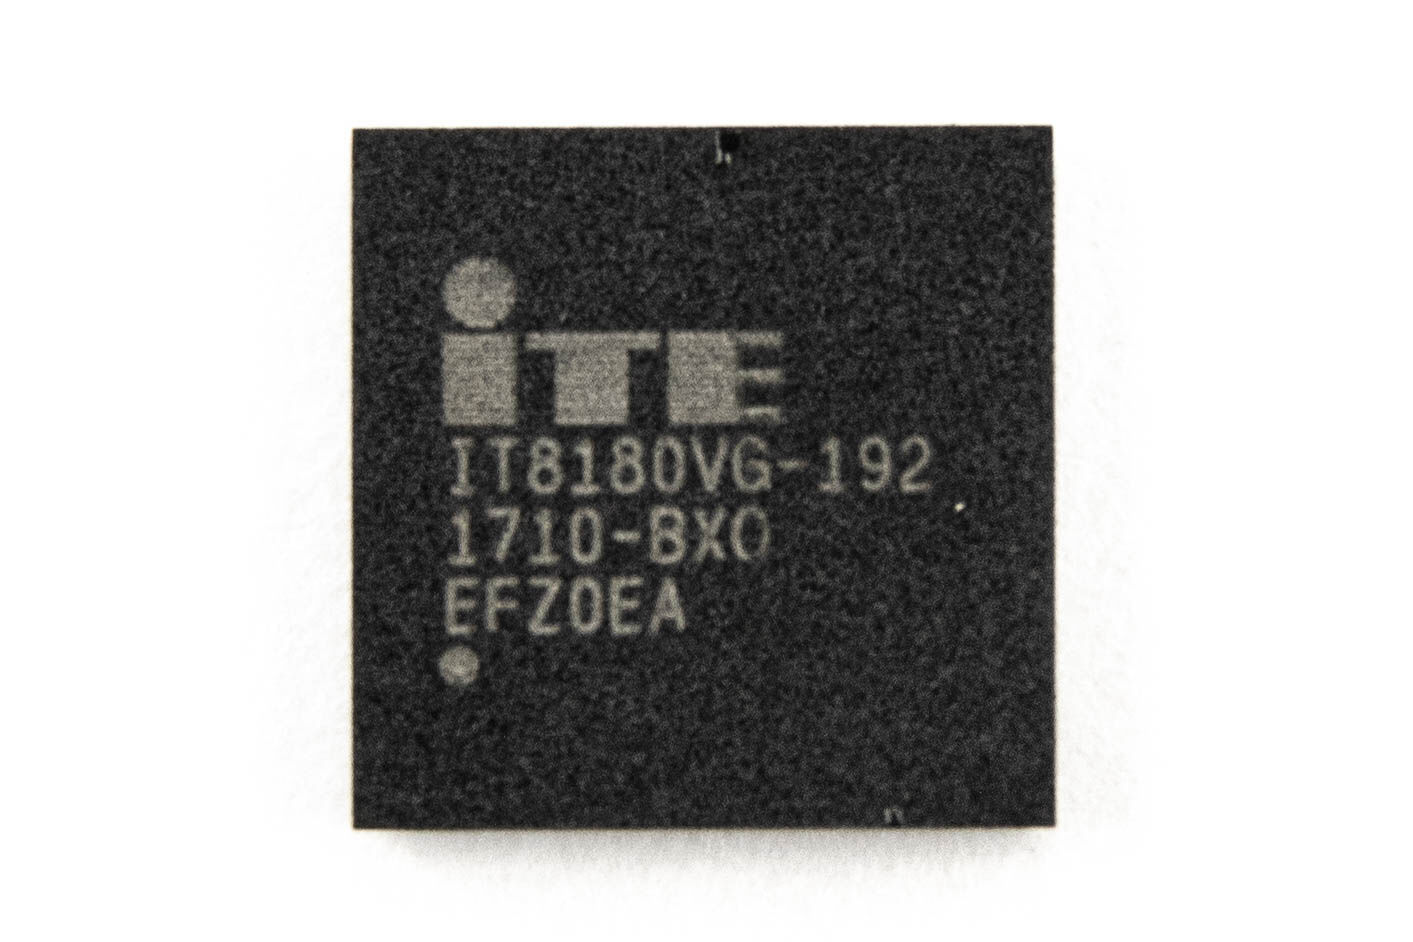 Мультиконтроллер IT8180VG-192 BXO ITE